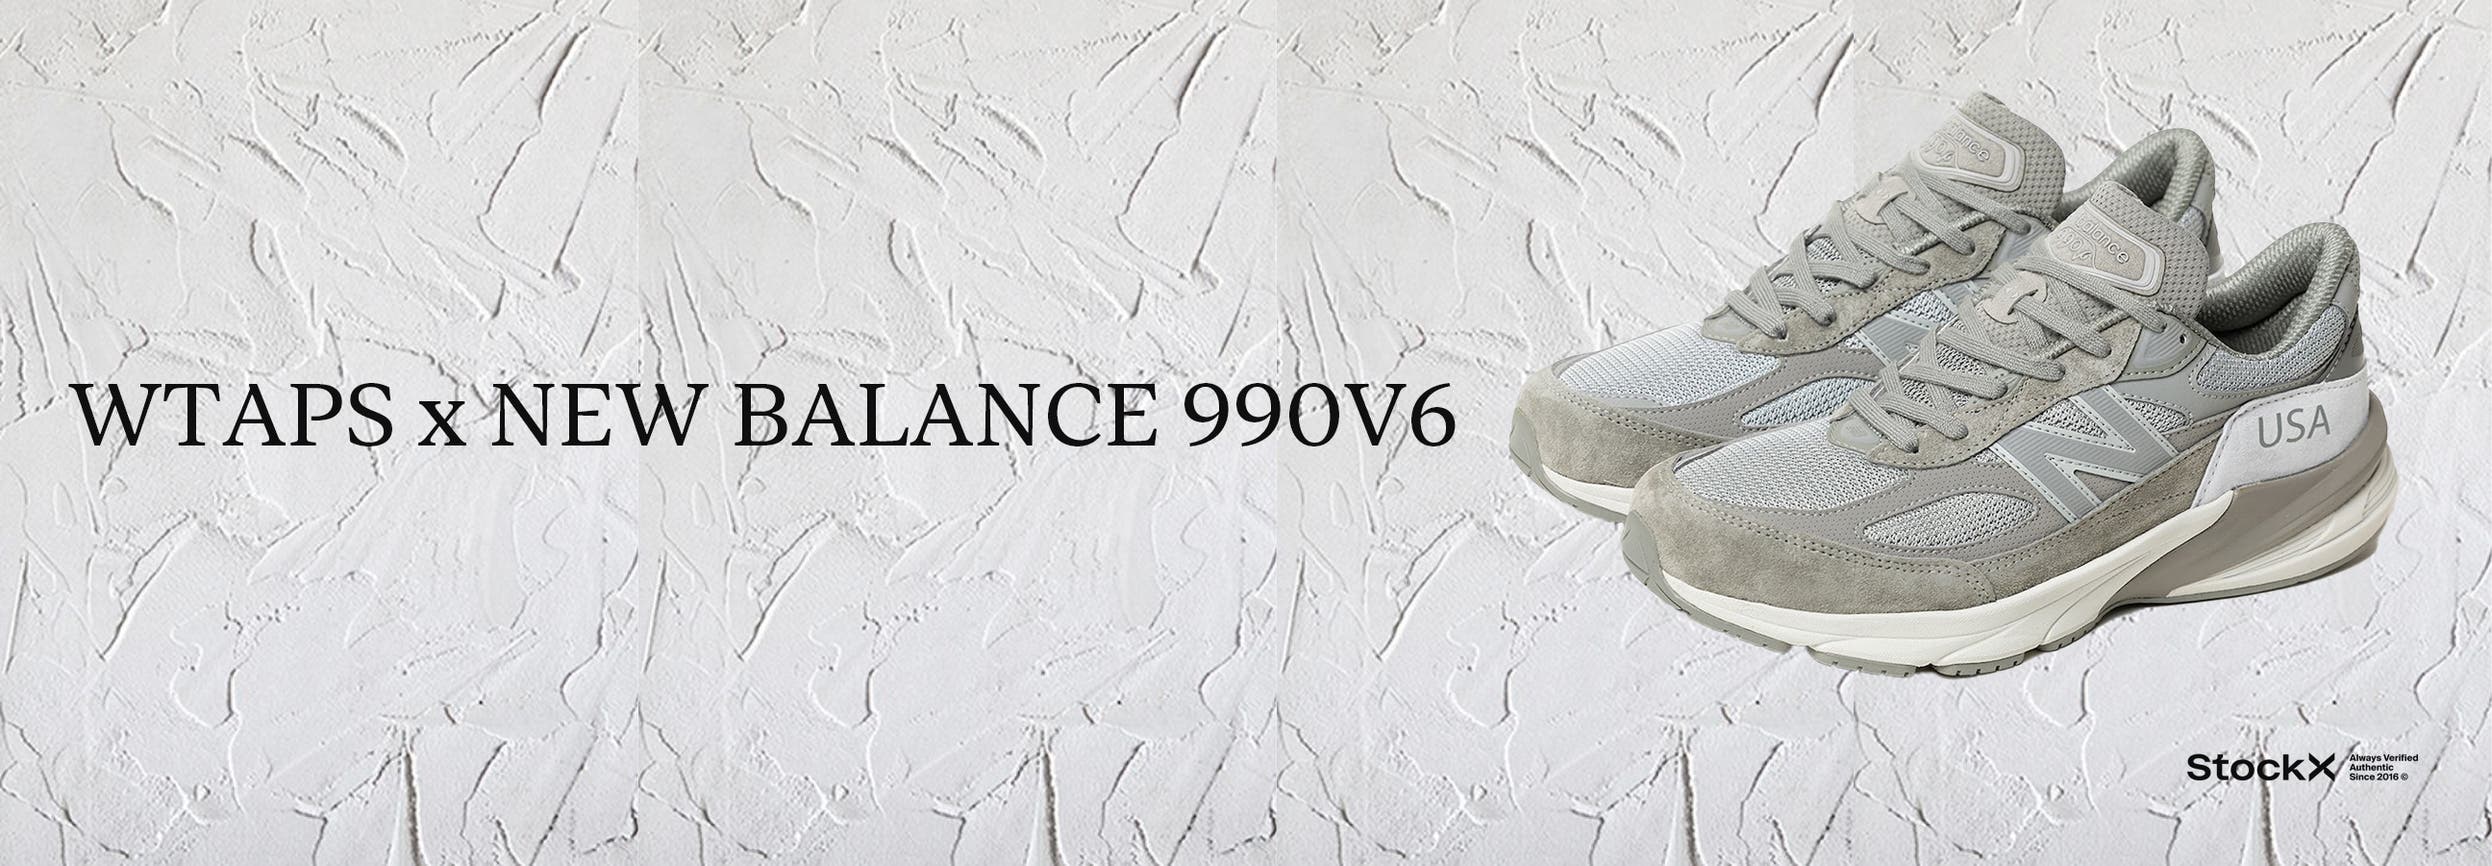 new balance 990v6 wtaps.png